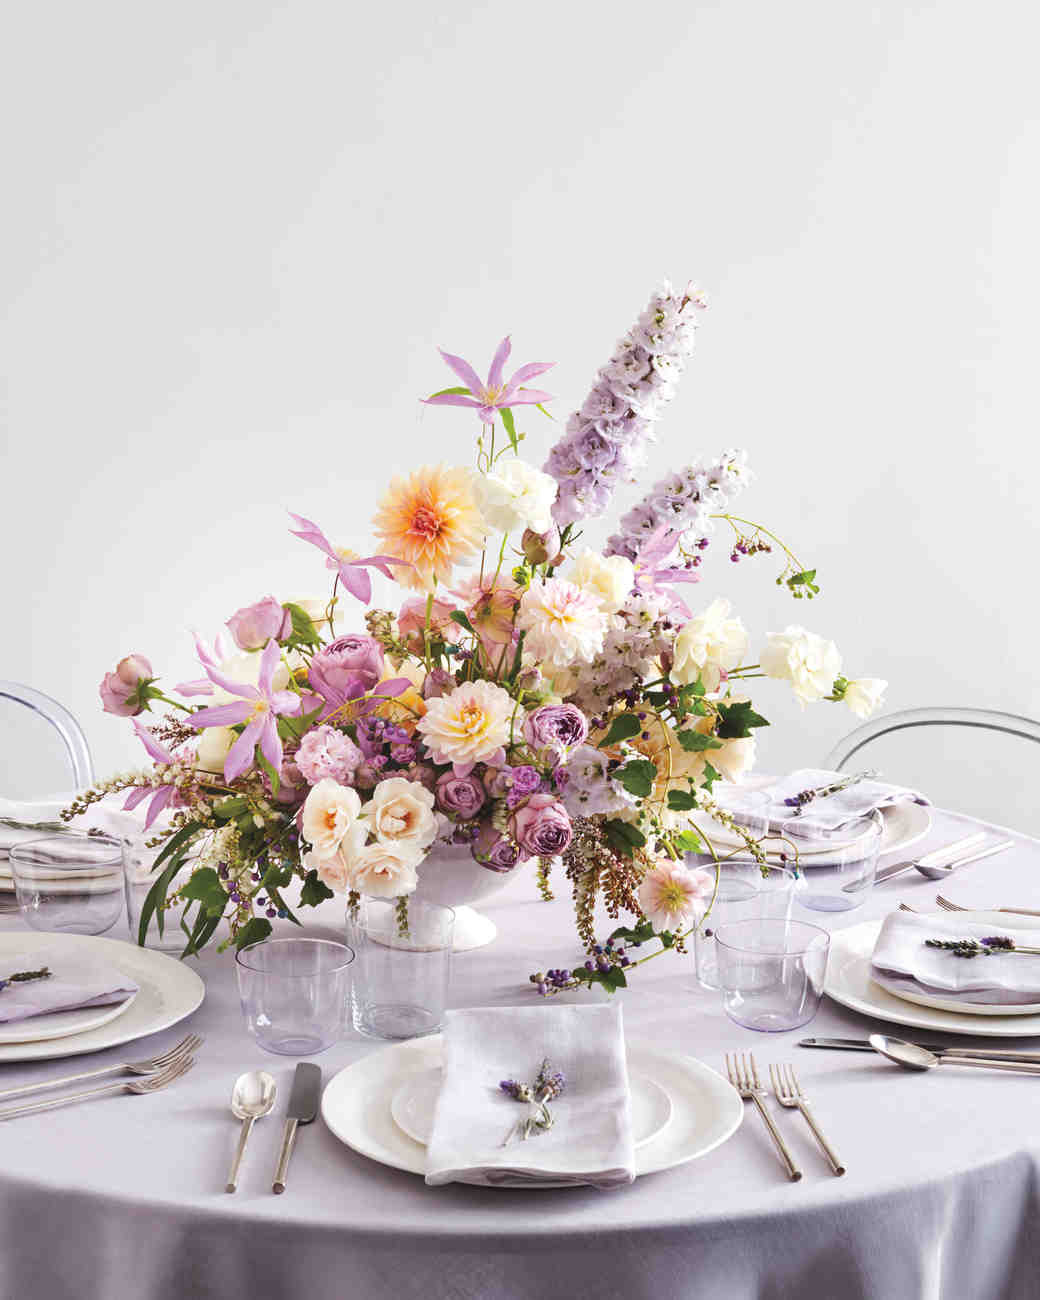 DIY Floral Arrangements Wedding
 23 DIY Wedding Centerpieces We Love